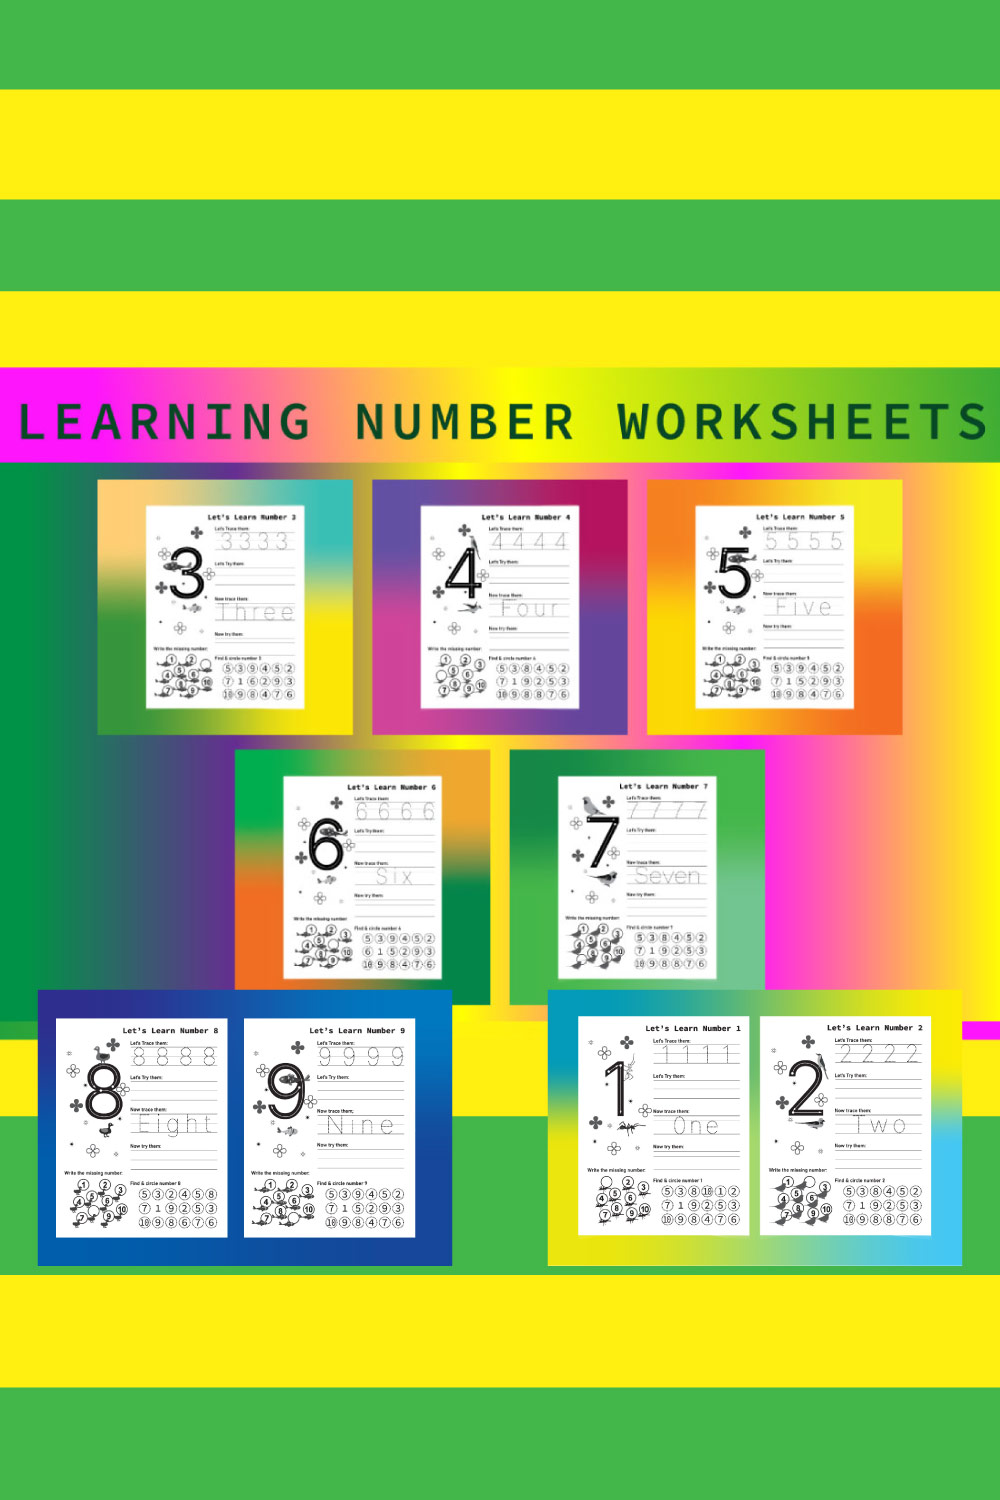 Learning Number Worksheets pinterest preview image.